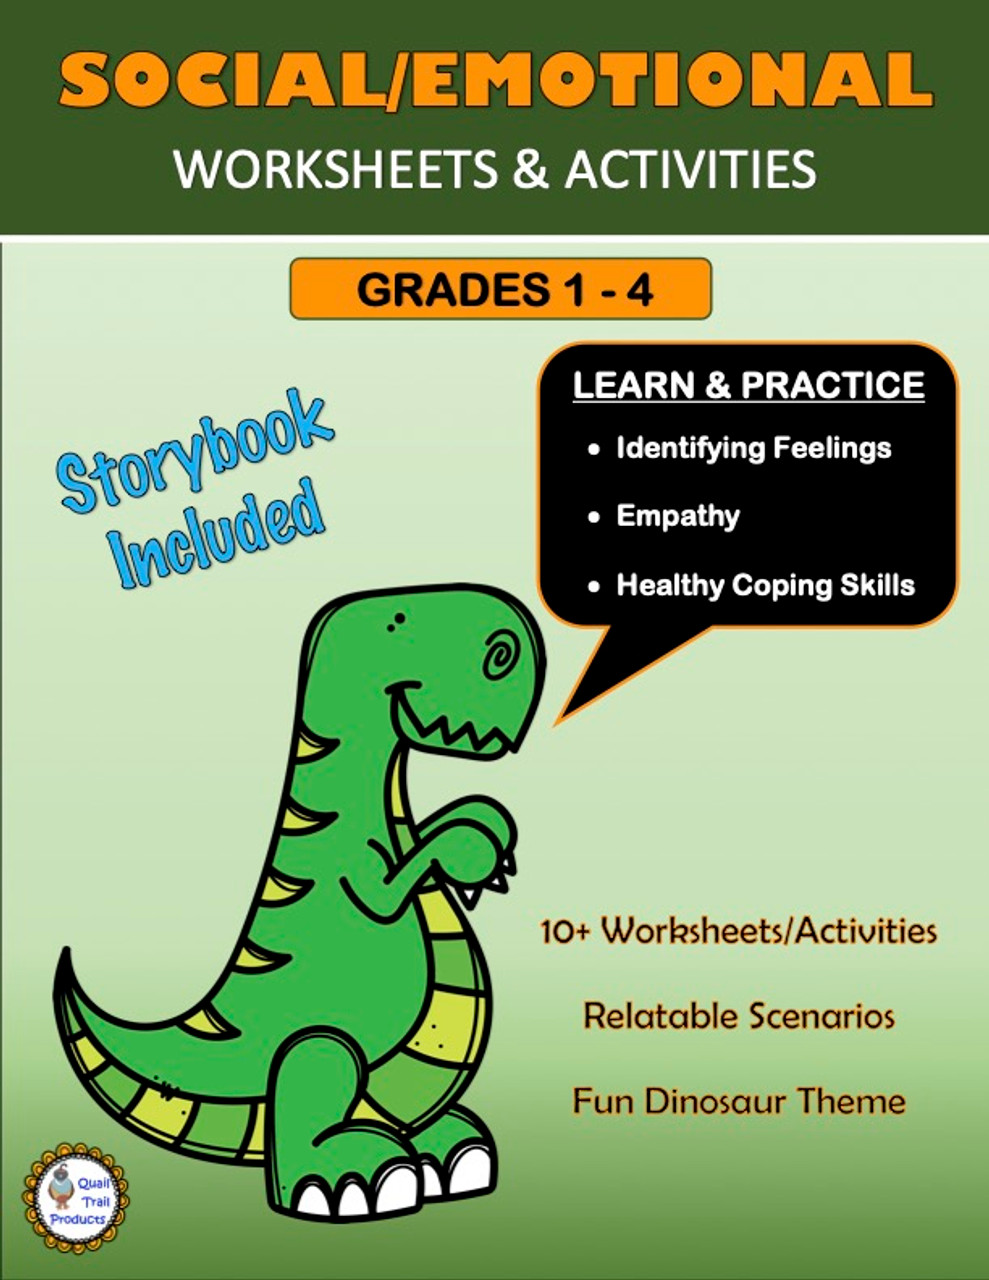 Dinosaur: Big and small: English ESL worksheets pdf & doc